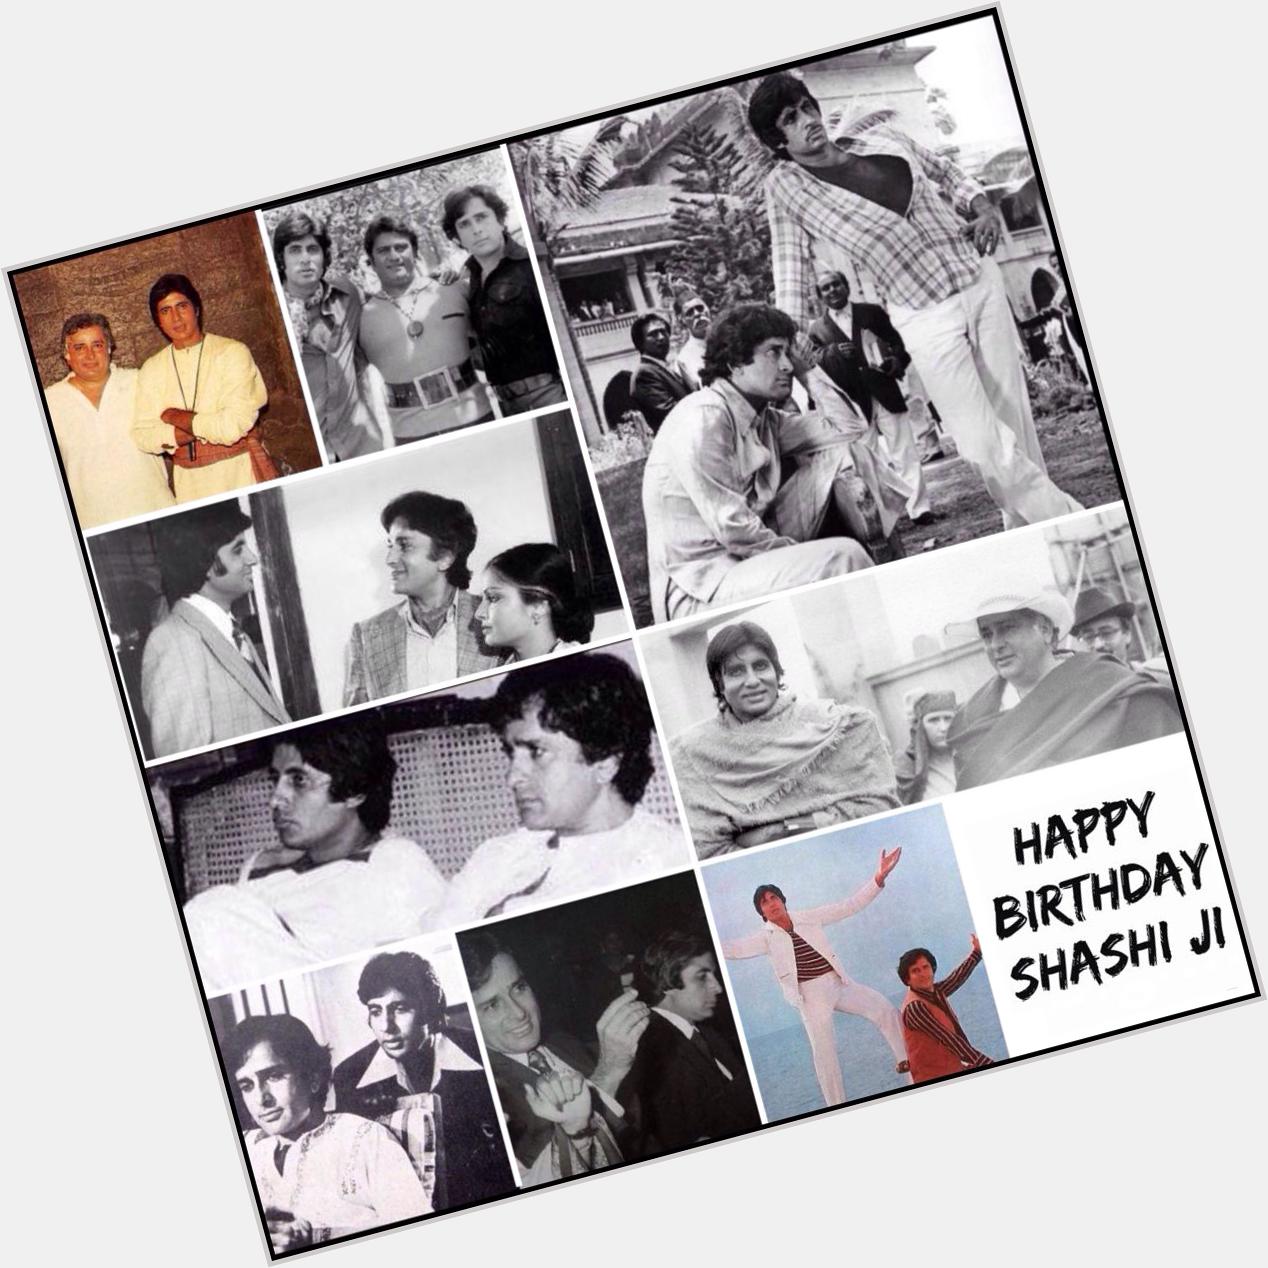  Happy Birthday To Shashi Kapoor ji. So many hit films Amit ji & Shashi done together From RKAM to Akyala 